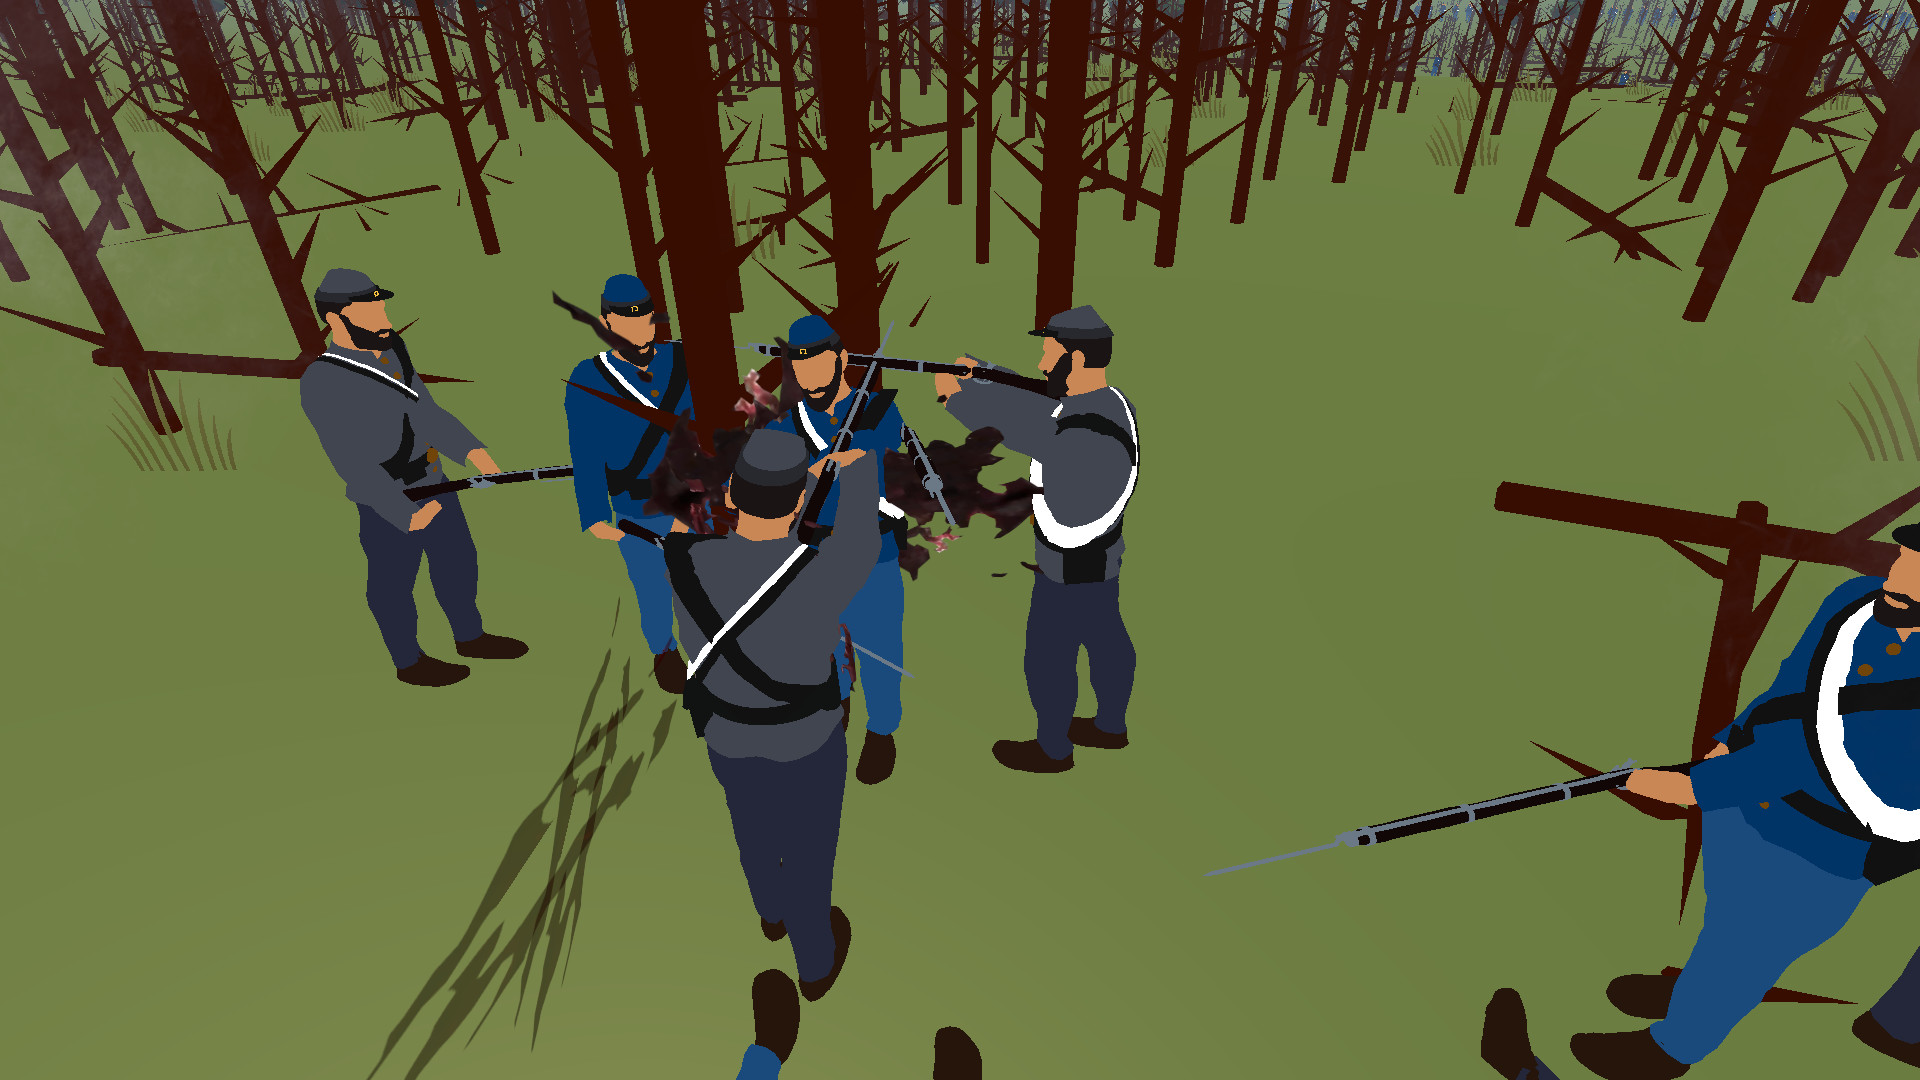 Rebel Reenactment: Battle of the Wilderness Free Download